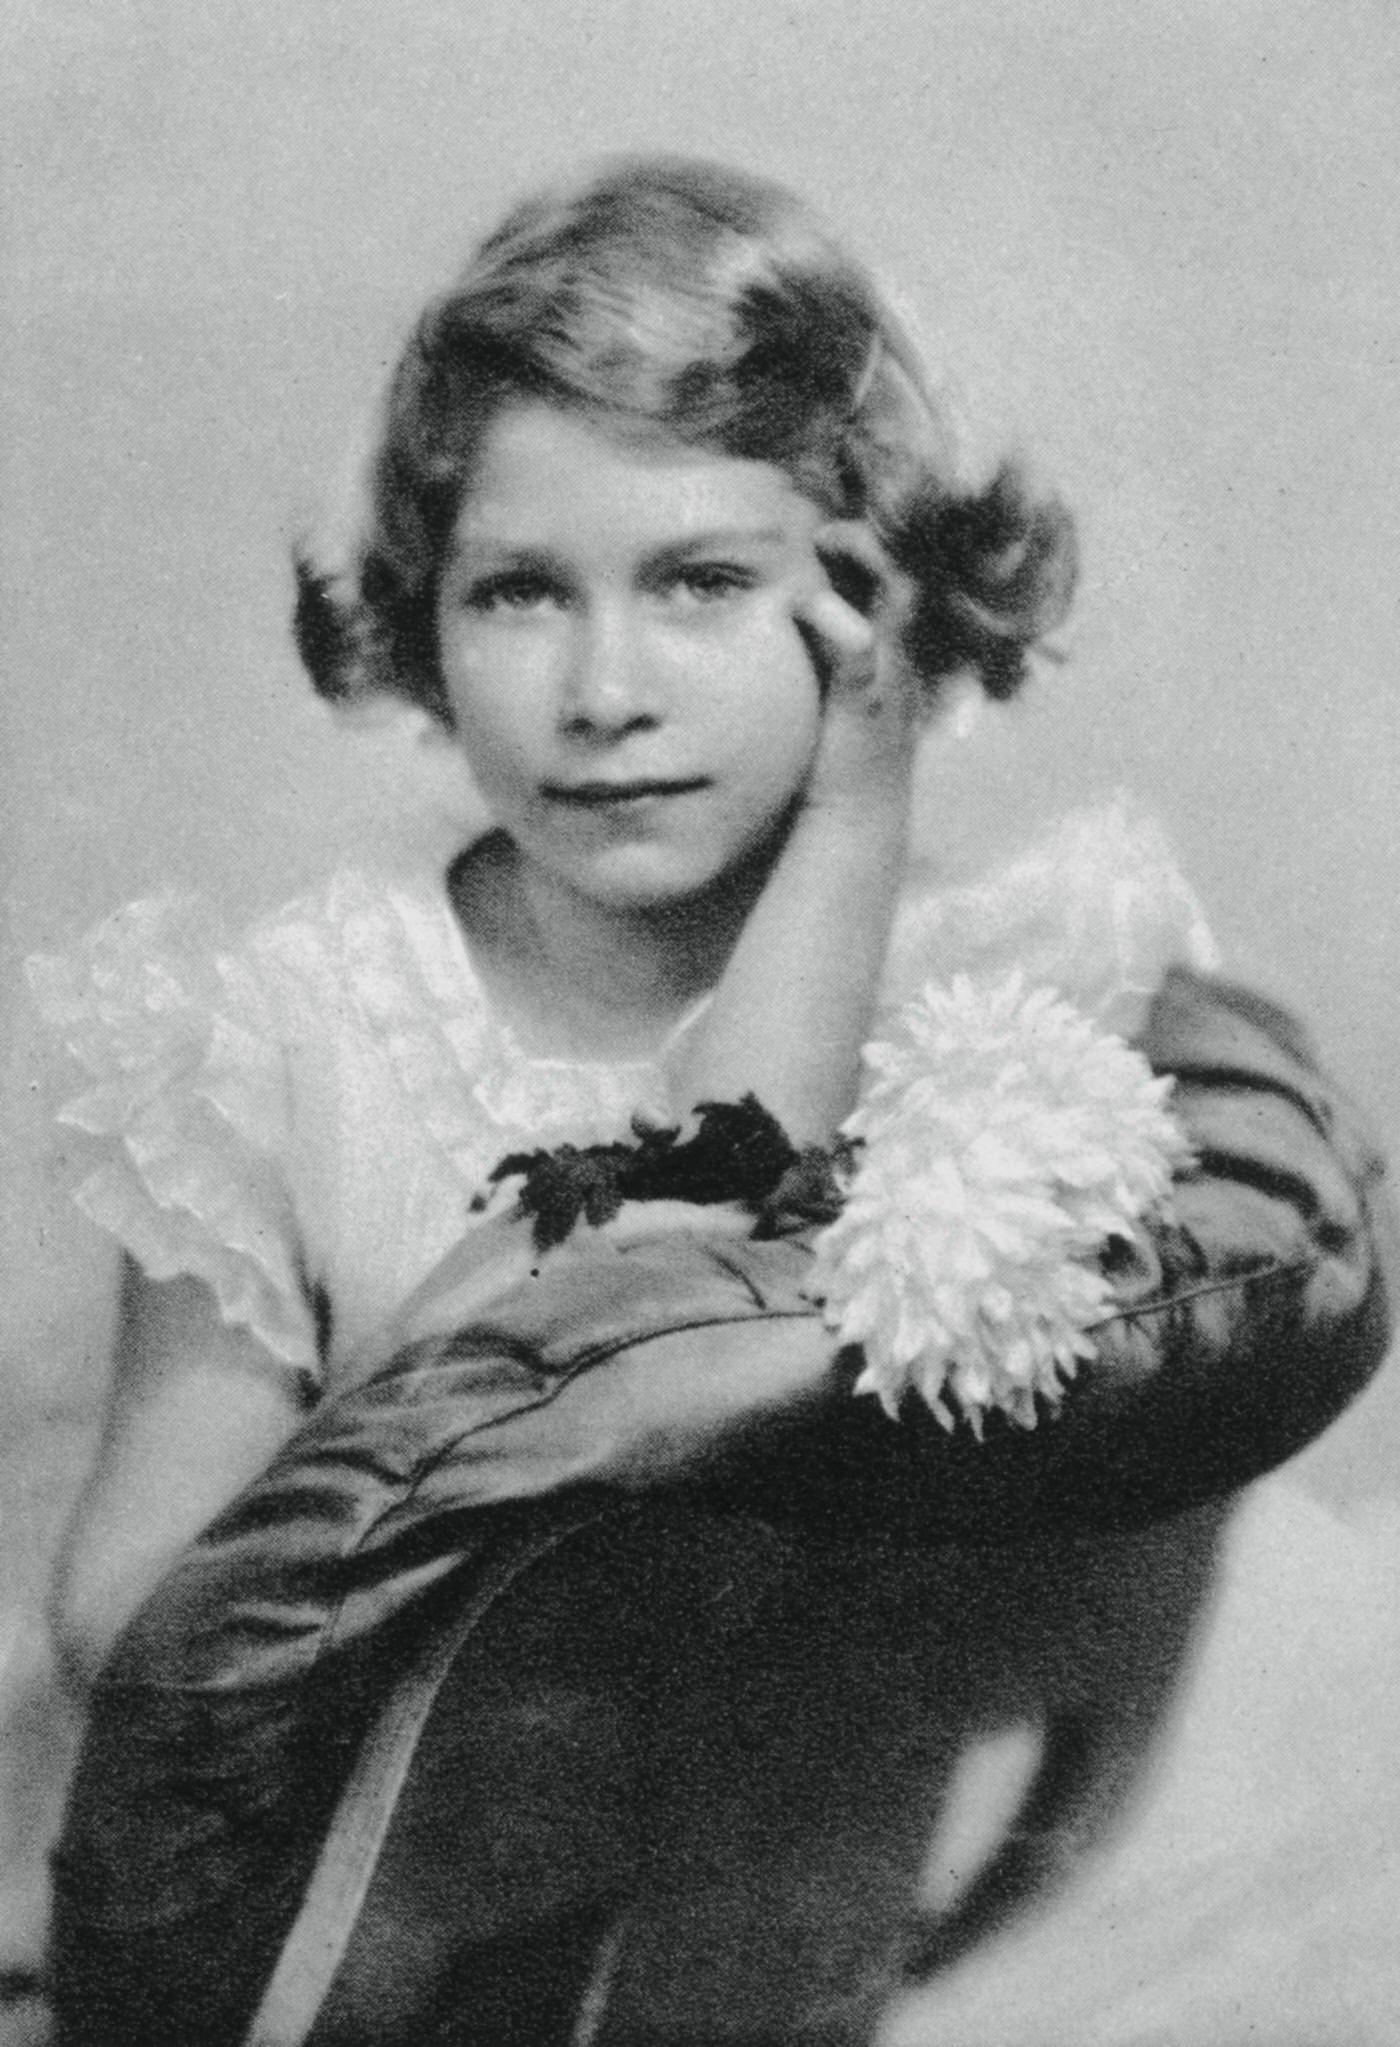 Princess Elizabeth at Age Nine, 1935